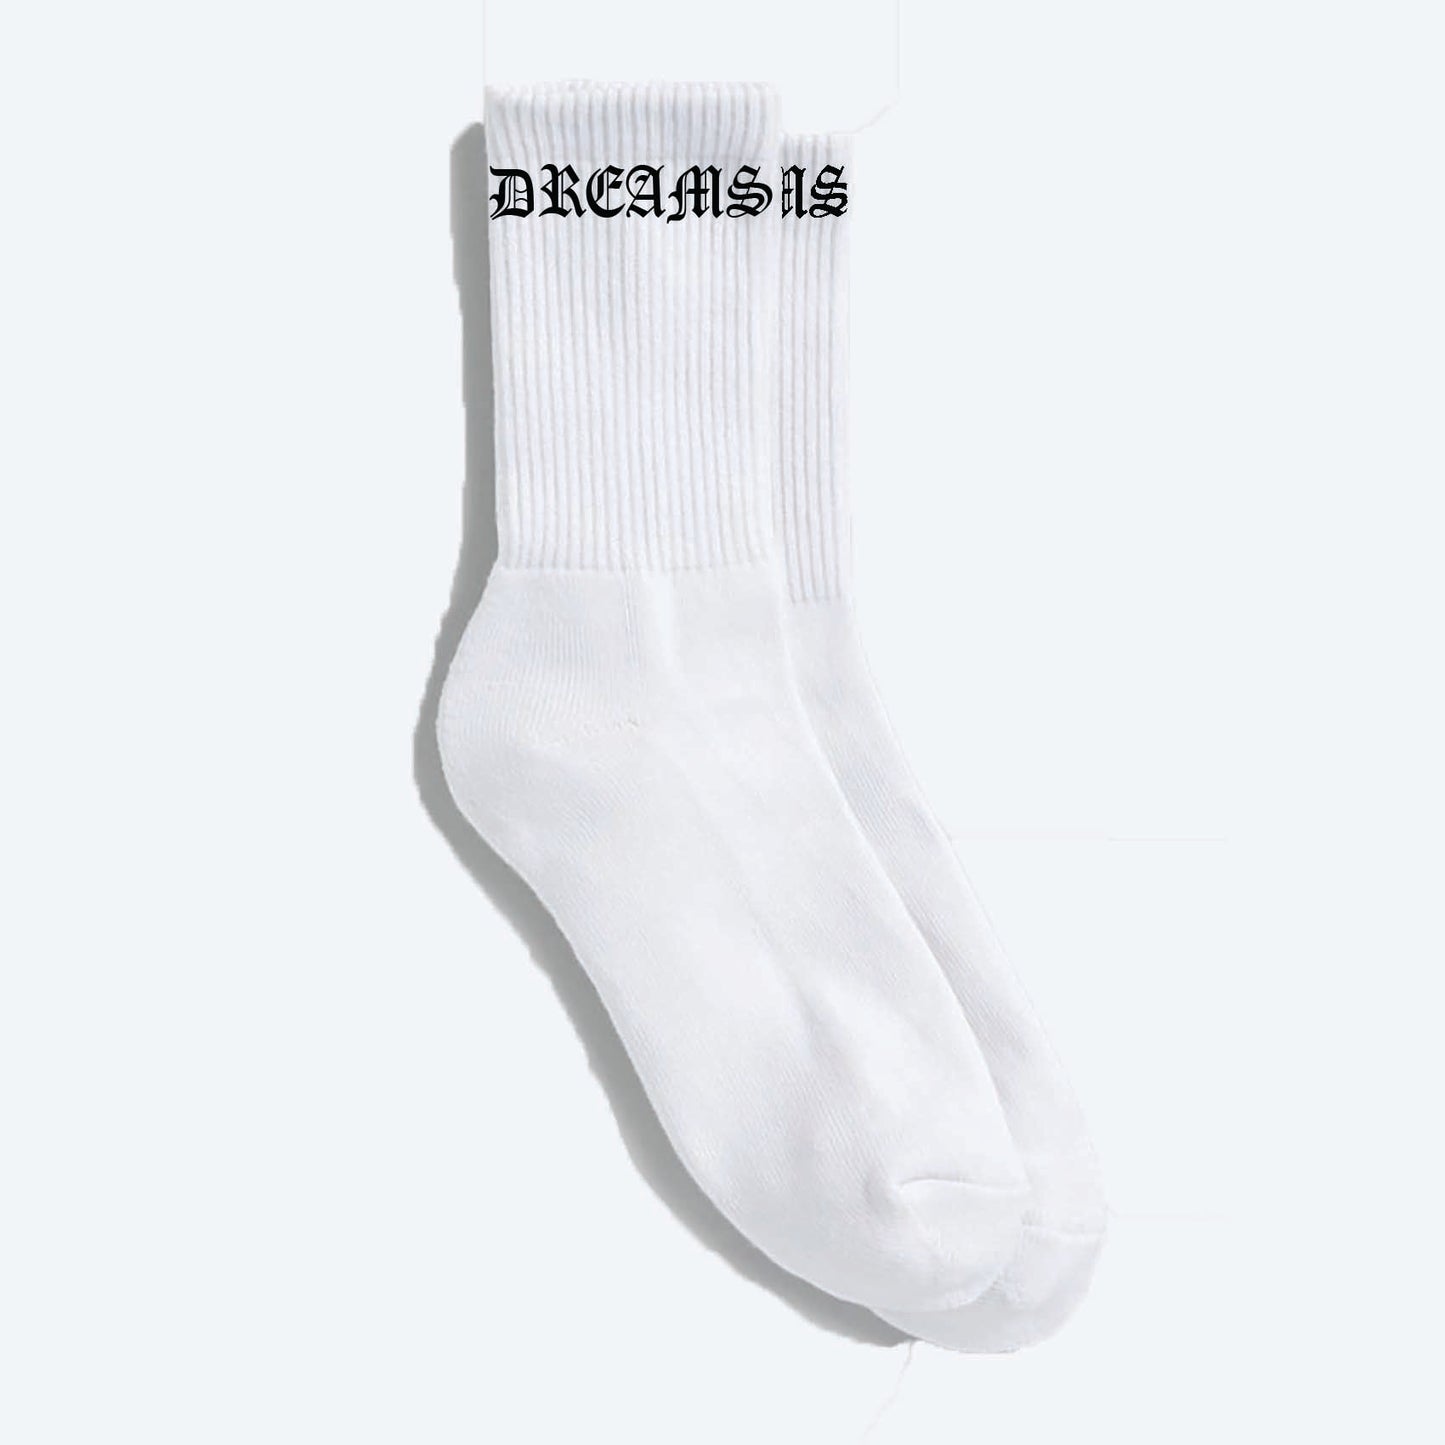 Dreams Old English Socks White/Black